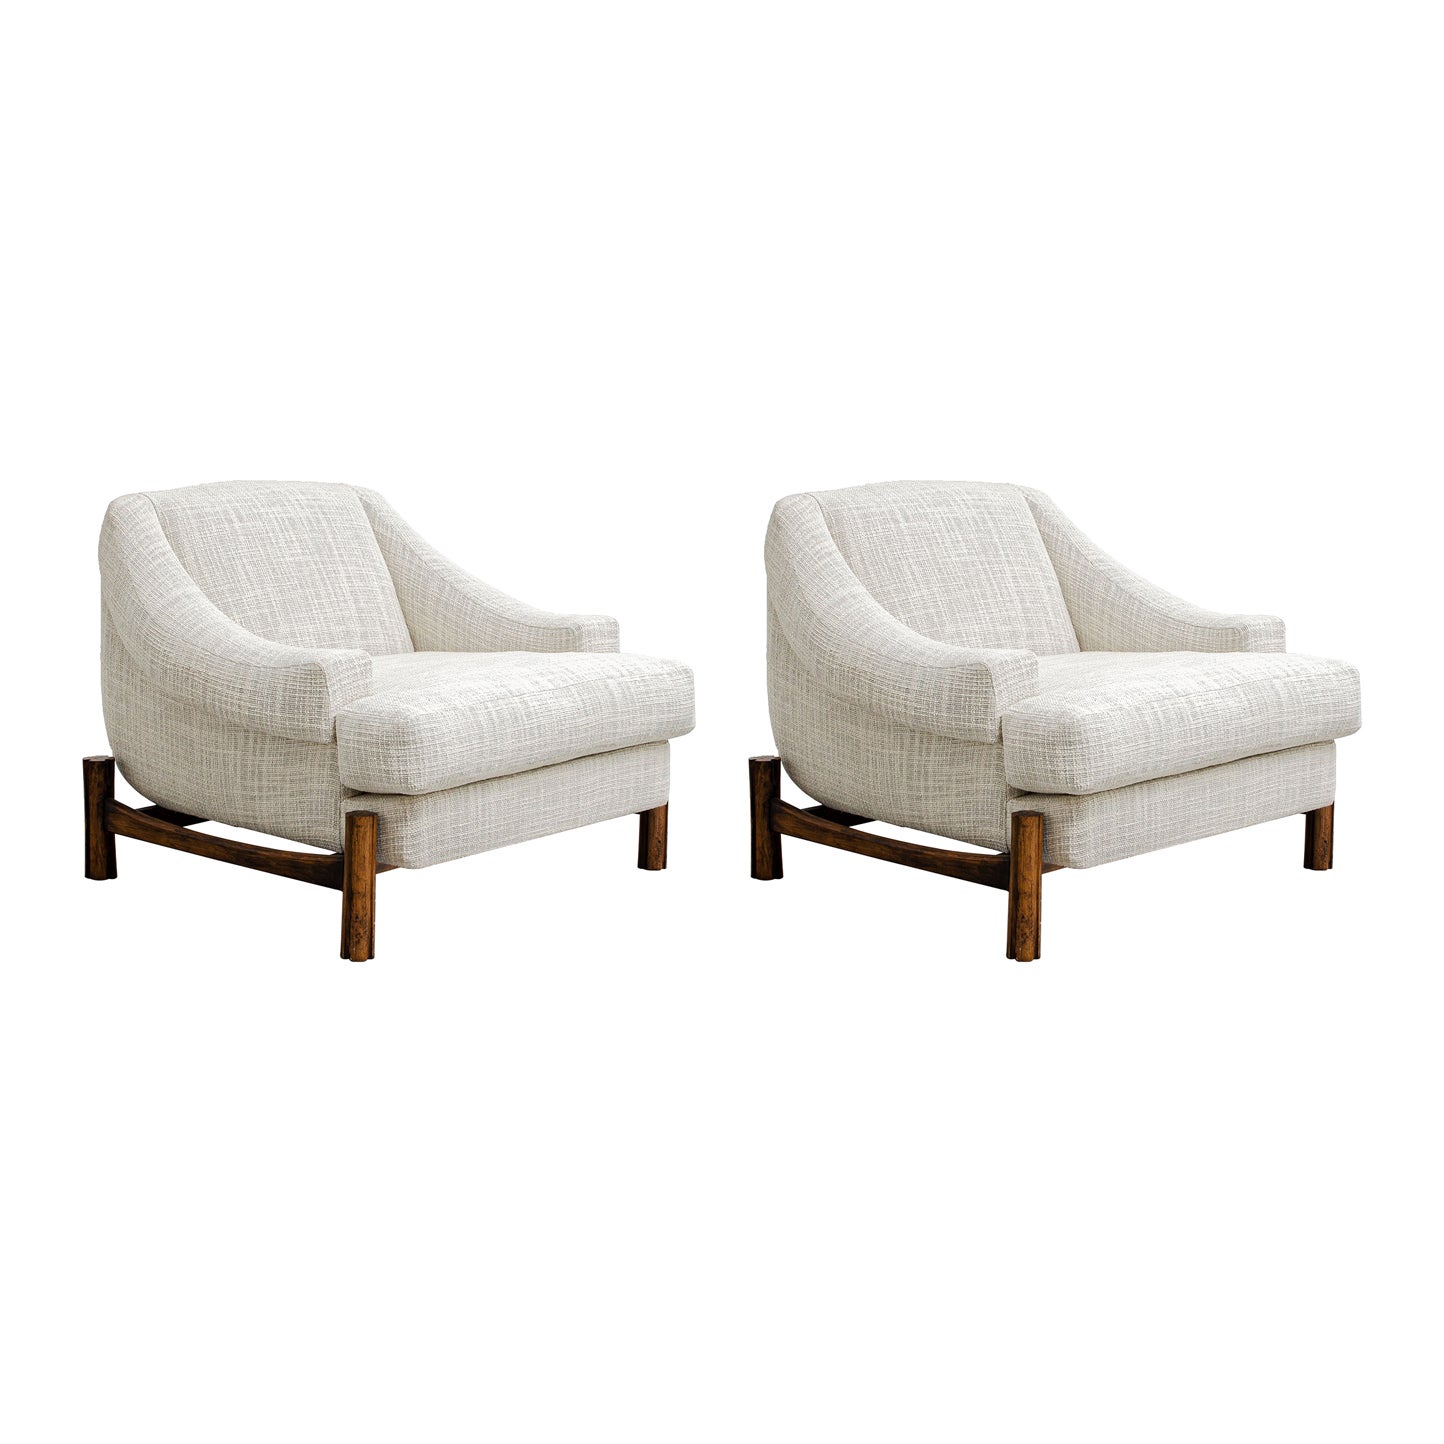 Pair of Móveis Cimo Round Lounge Chair, 60's Brazilian Midcentury